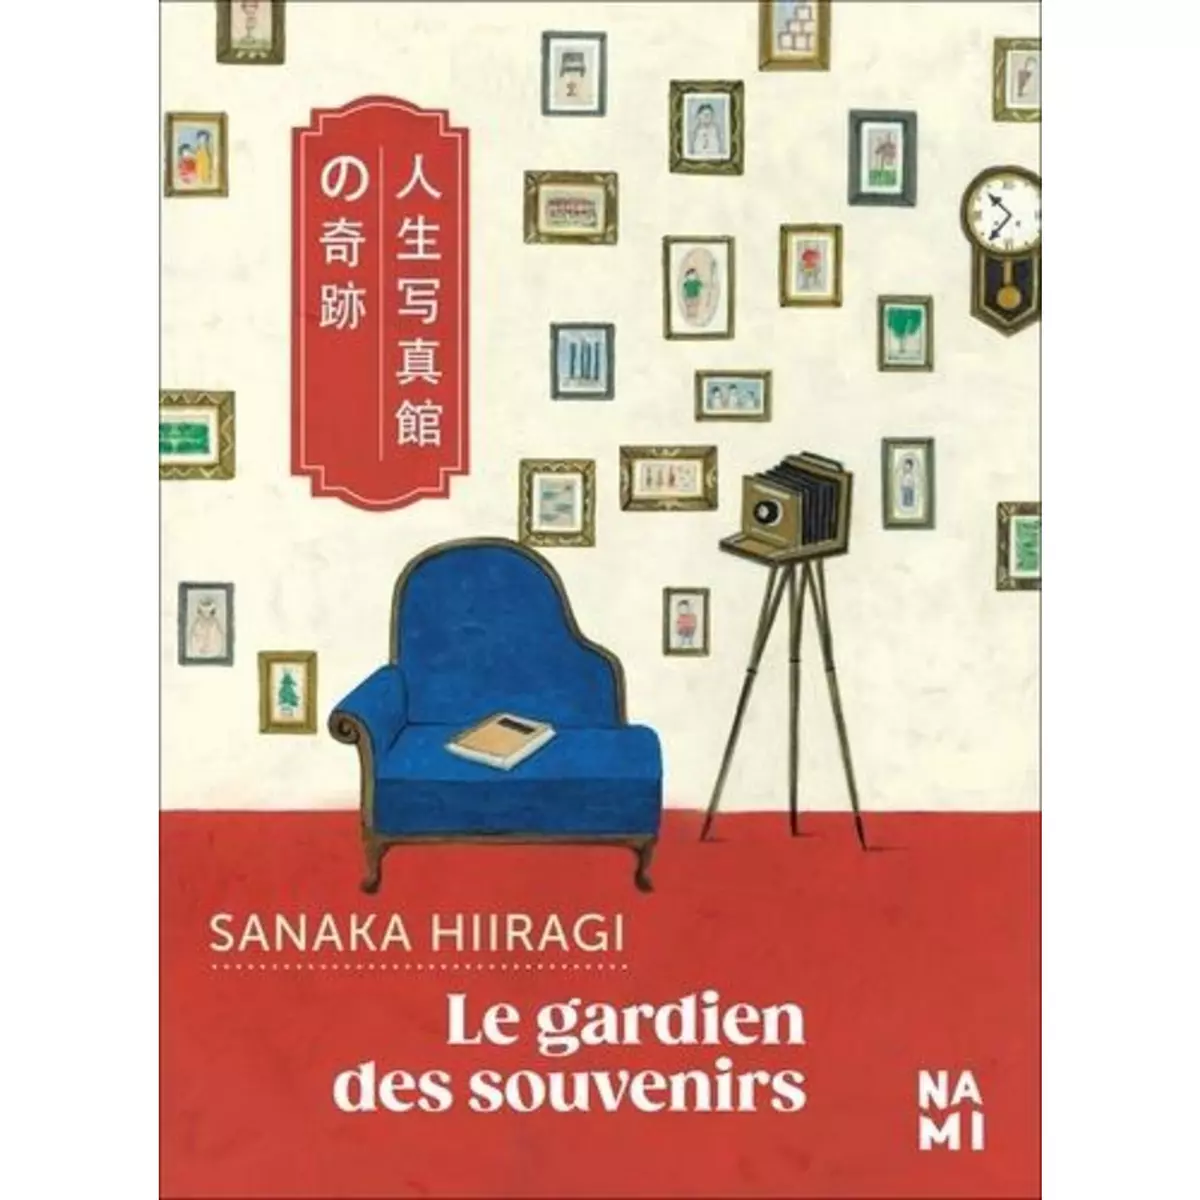  LE GARDIEN DES SOUVENIRS, Hiiragi Sanaka